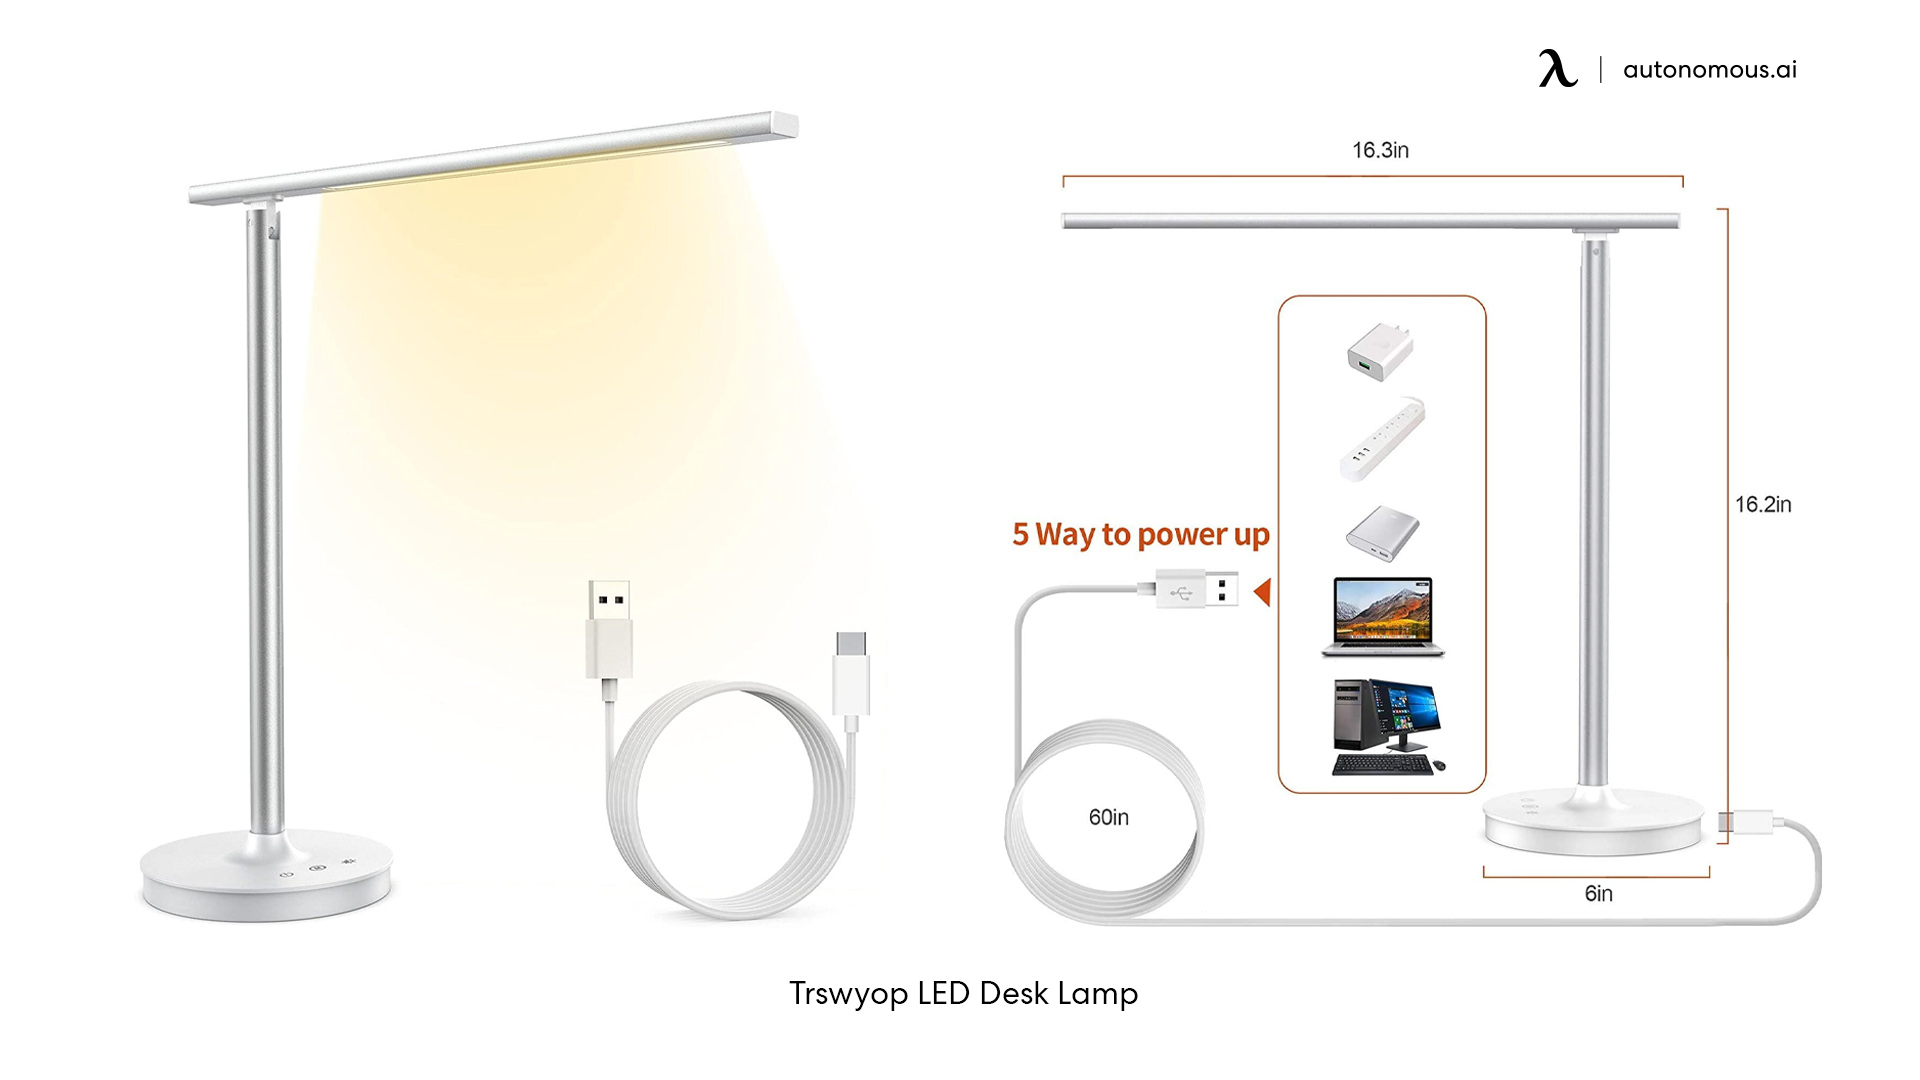 Trswyop LED Desk Lamp